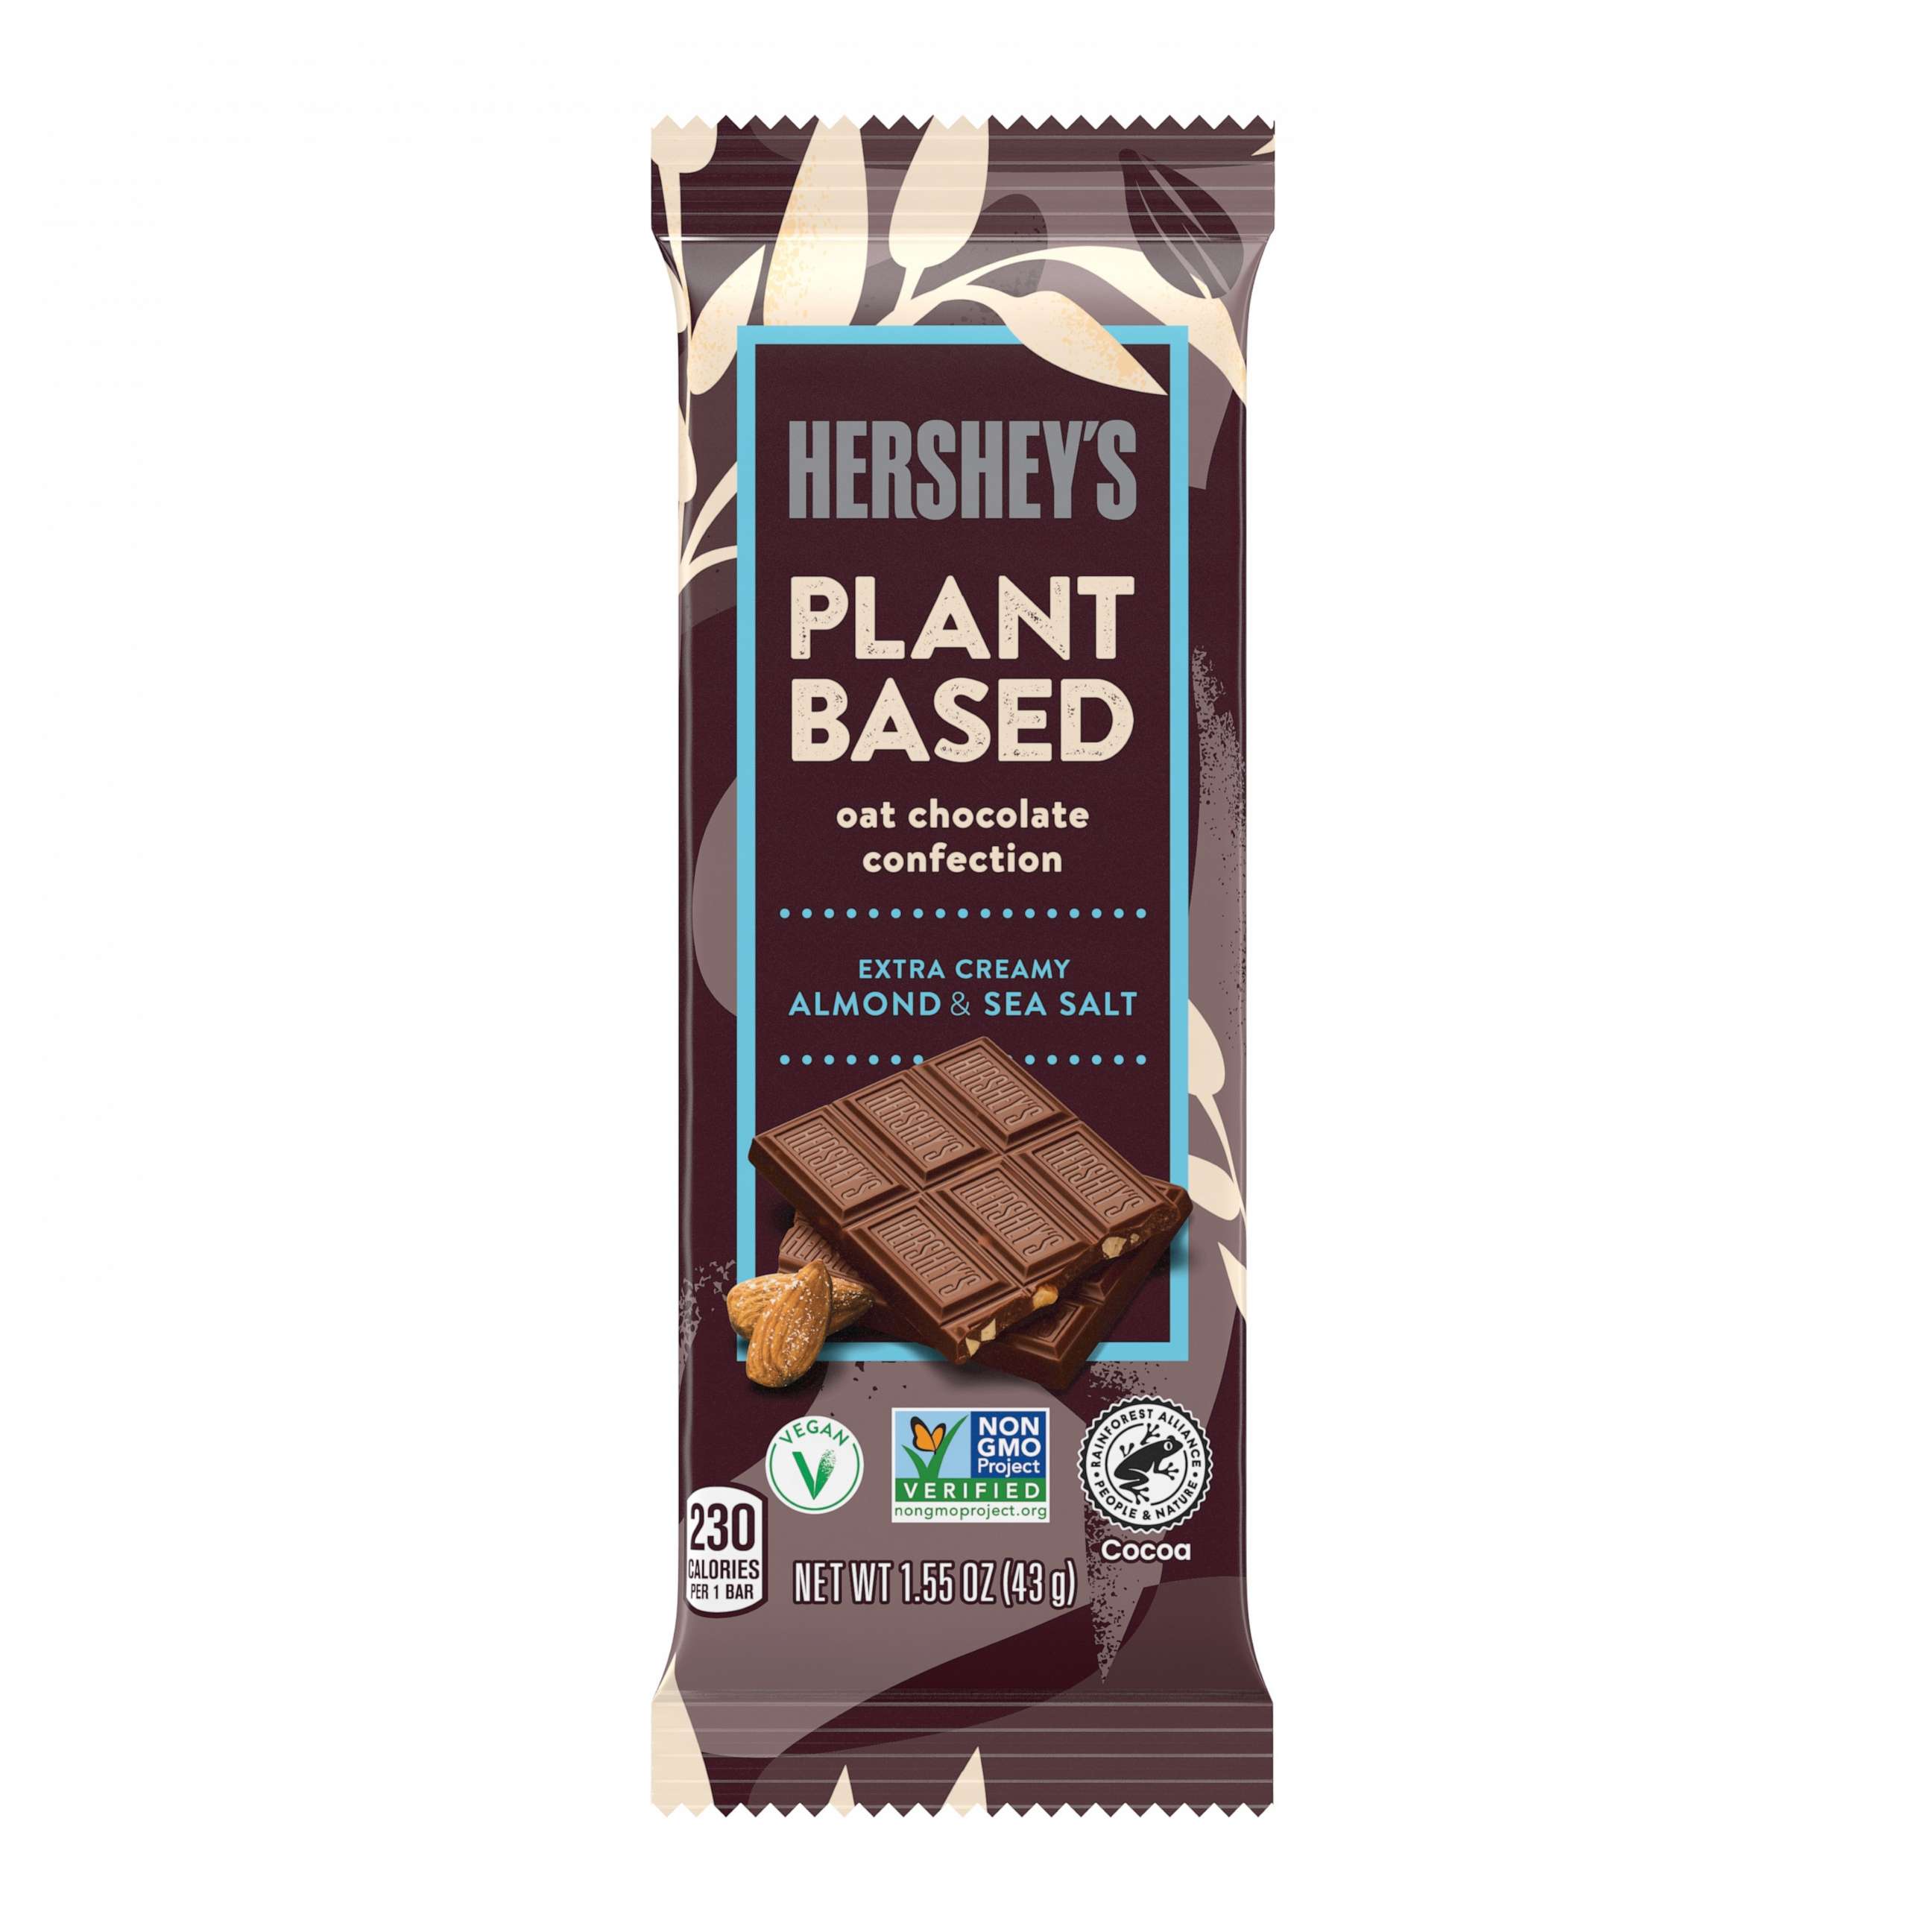 PHOTO: The new plant based extra creamy almond and sea salt Hershey's chocolate bar.